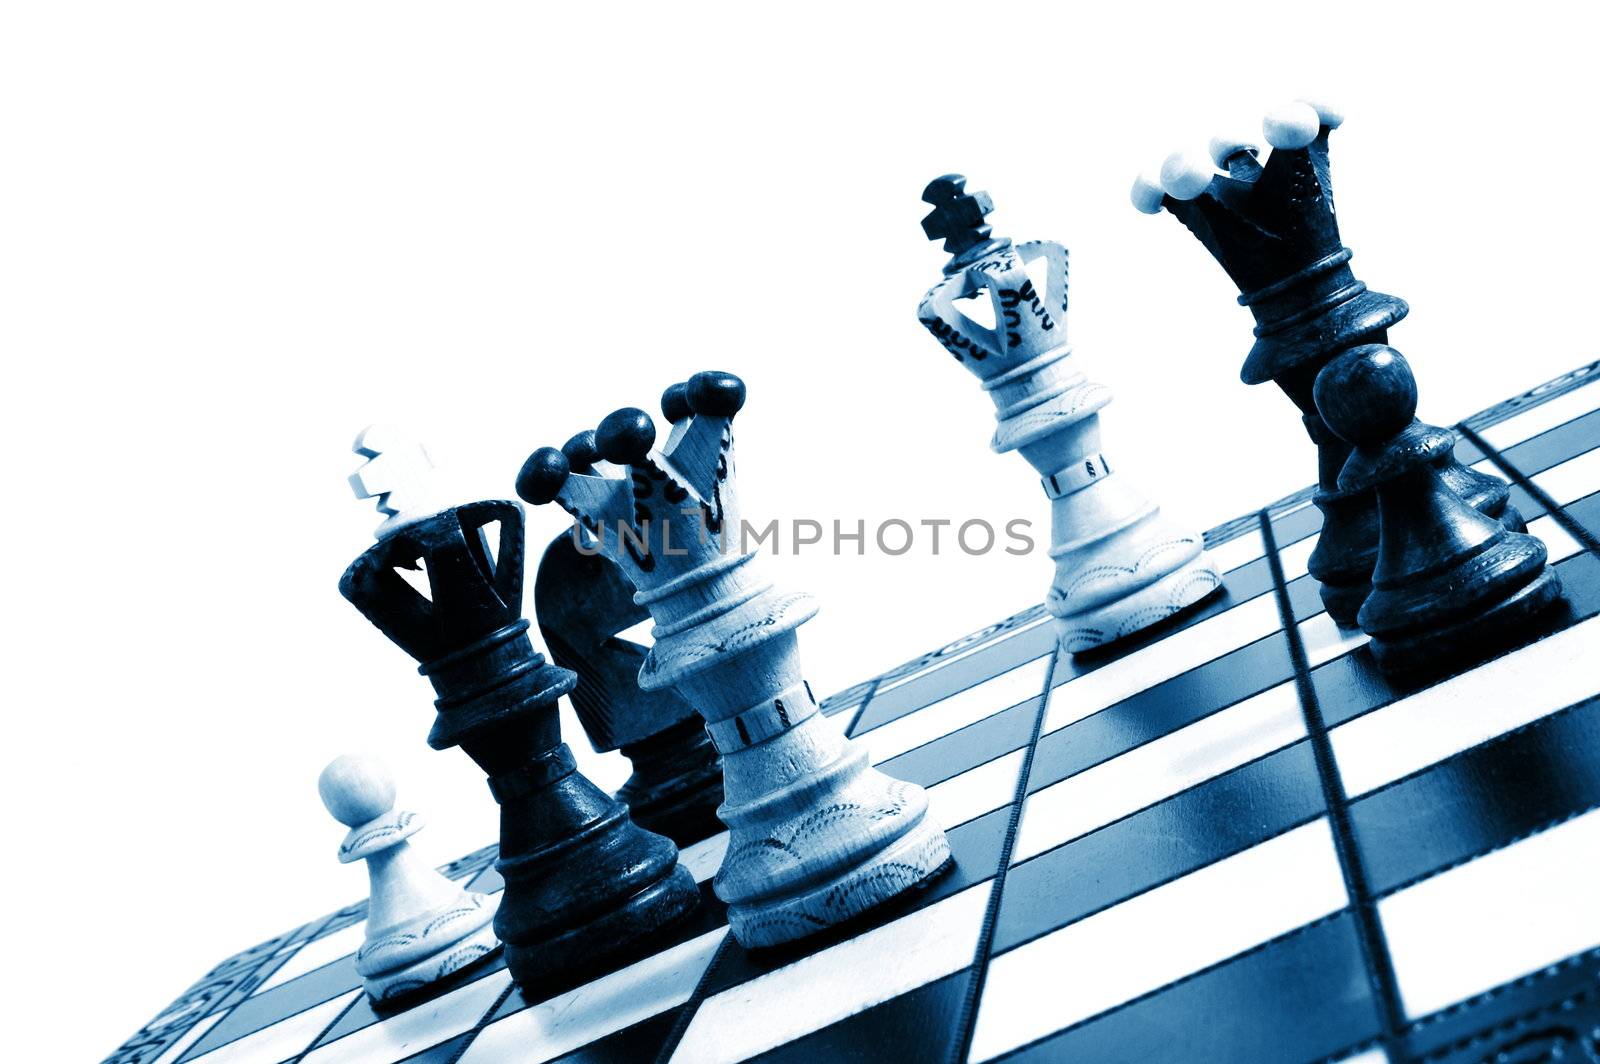 chess pieces by gunnar3000